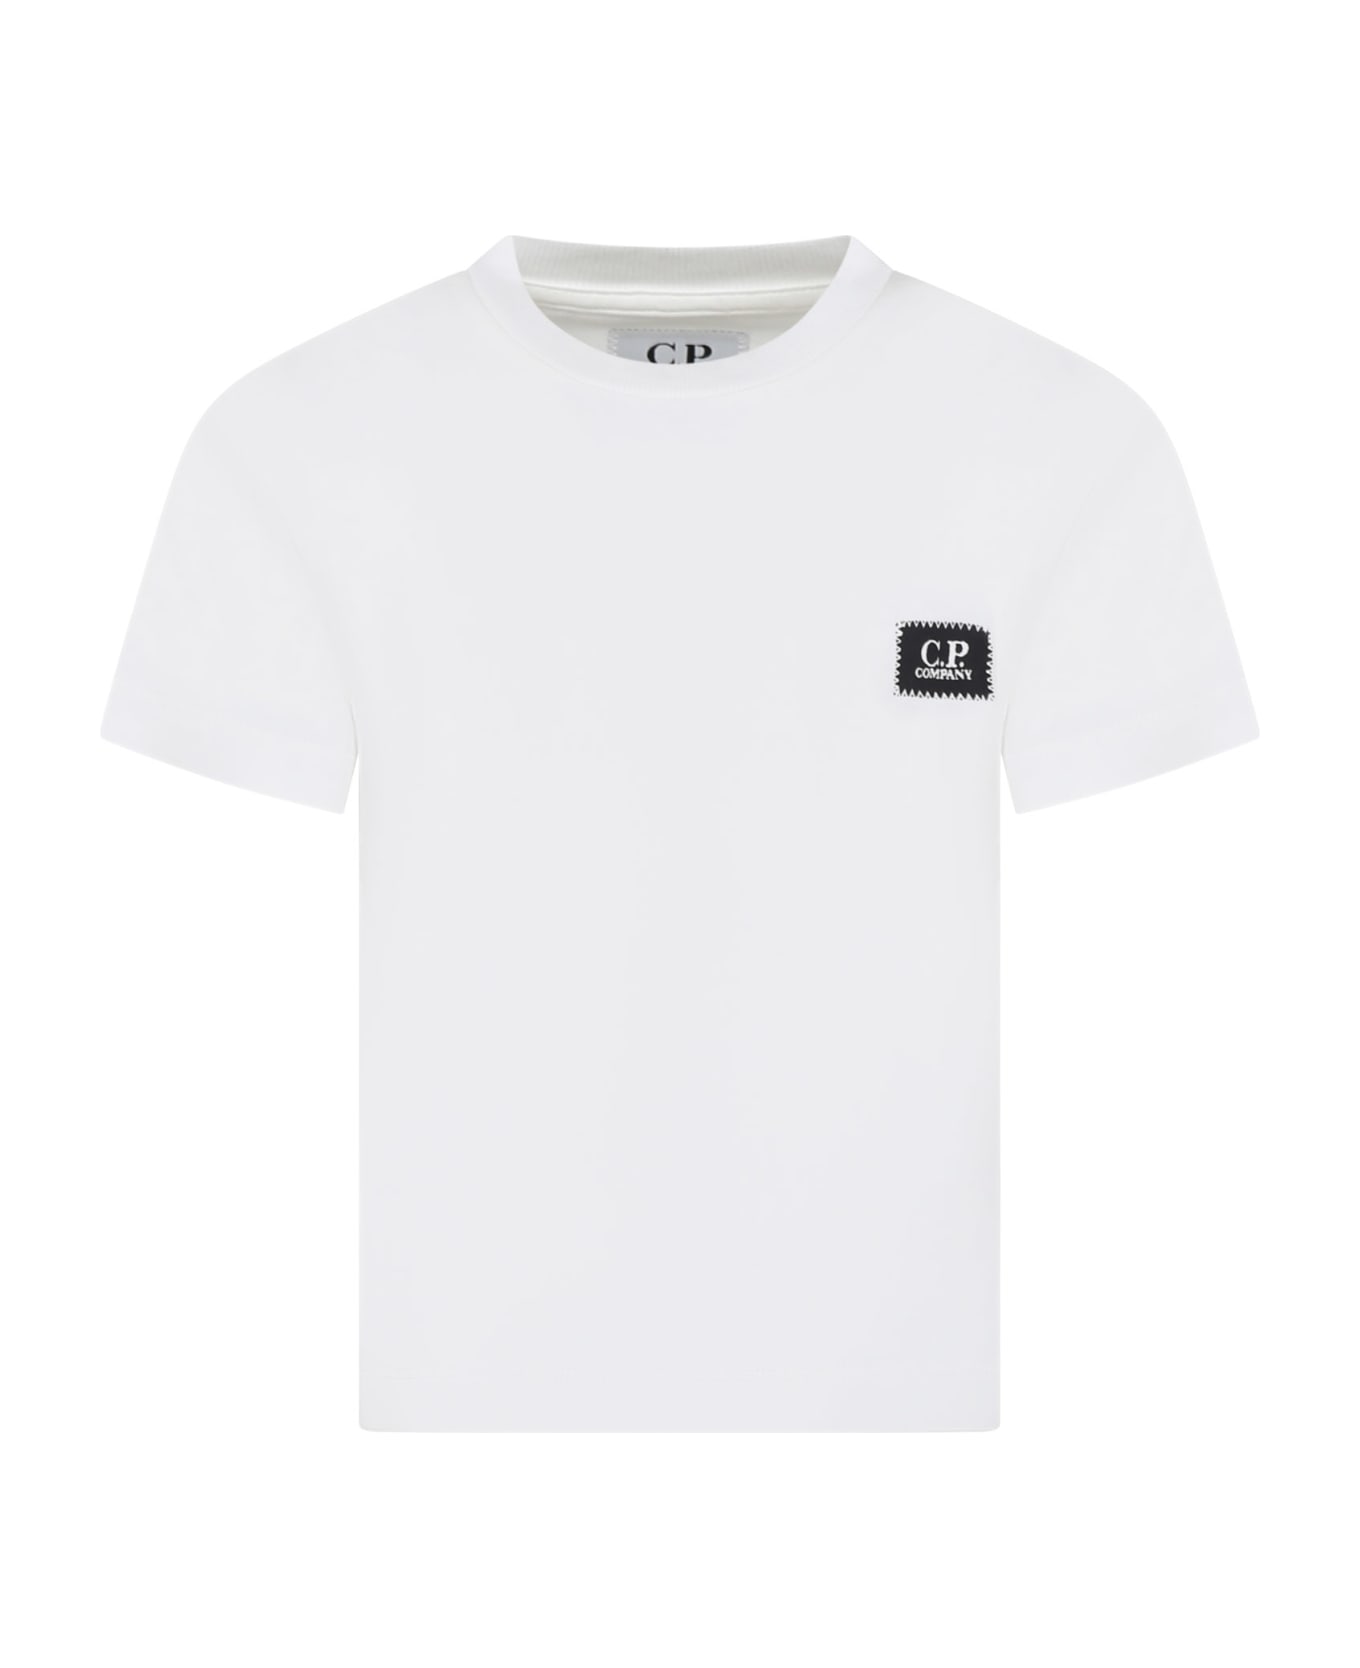 C.P. Company Undersixteen White T-shirt For Boy With Logo - Gauze white